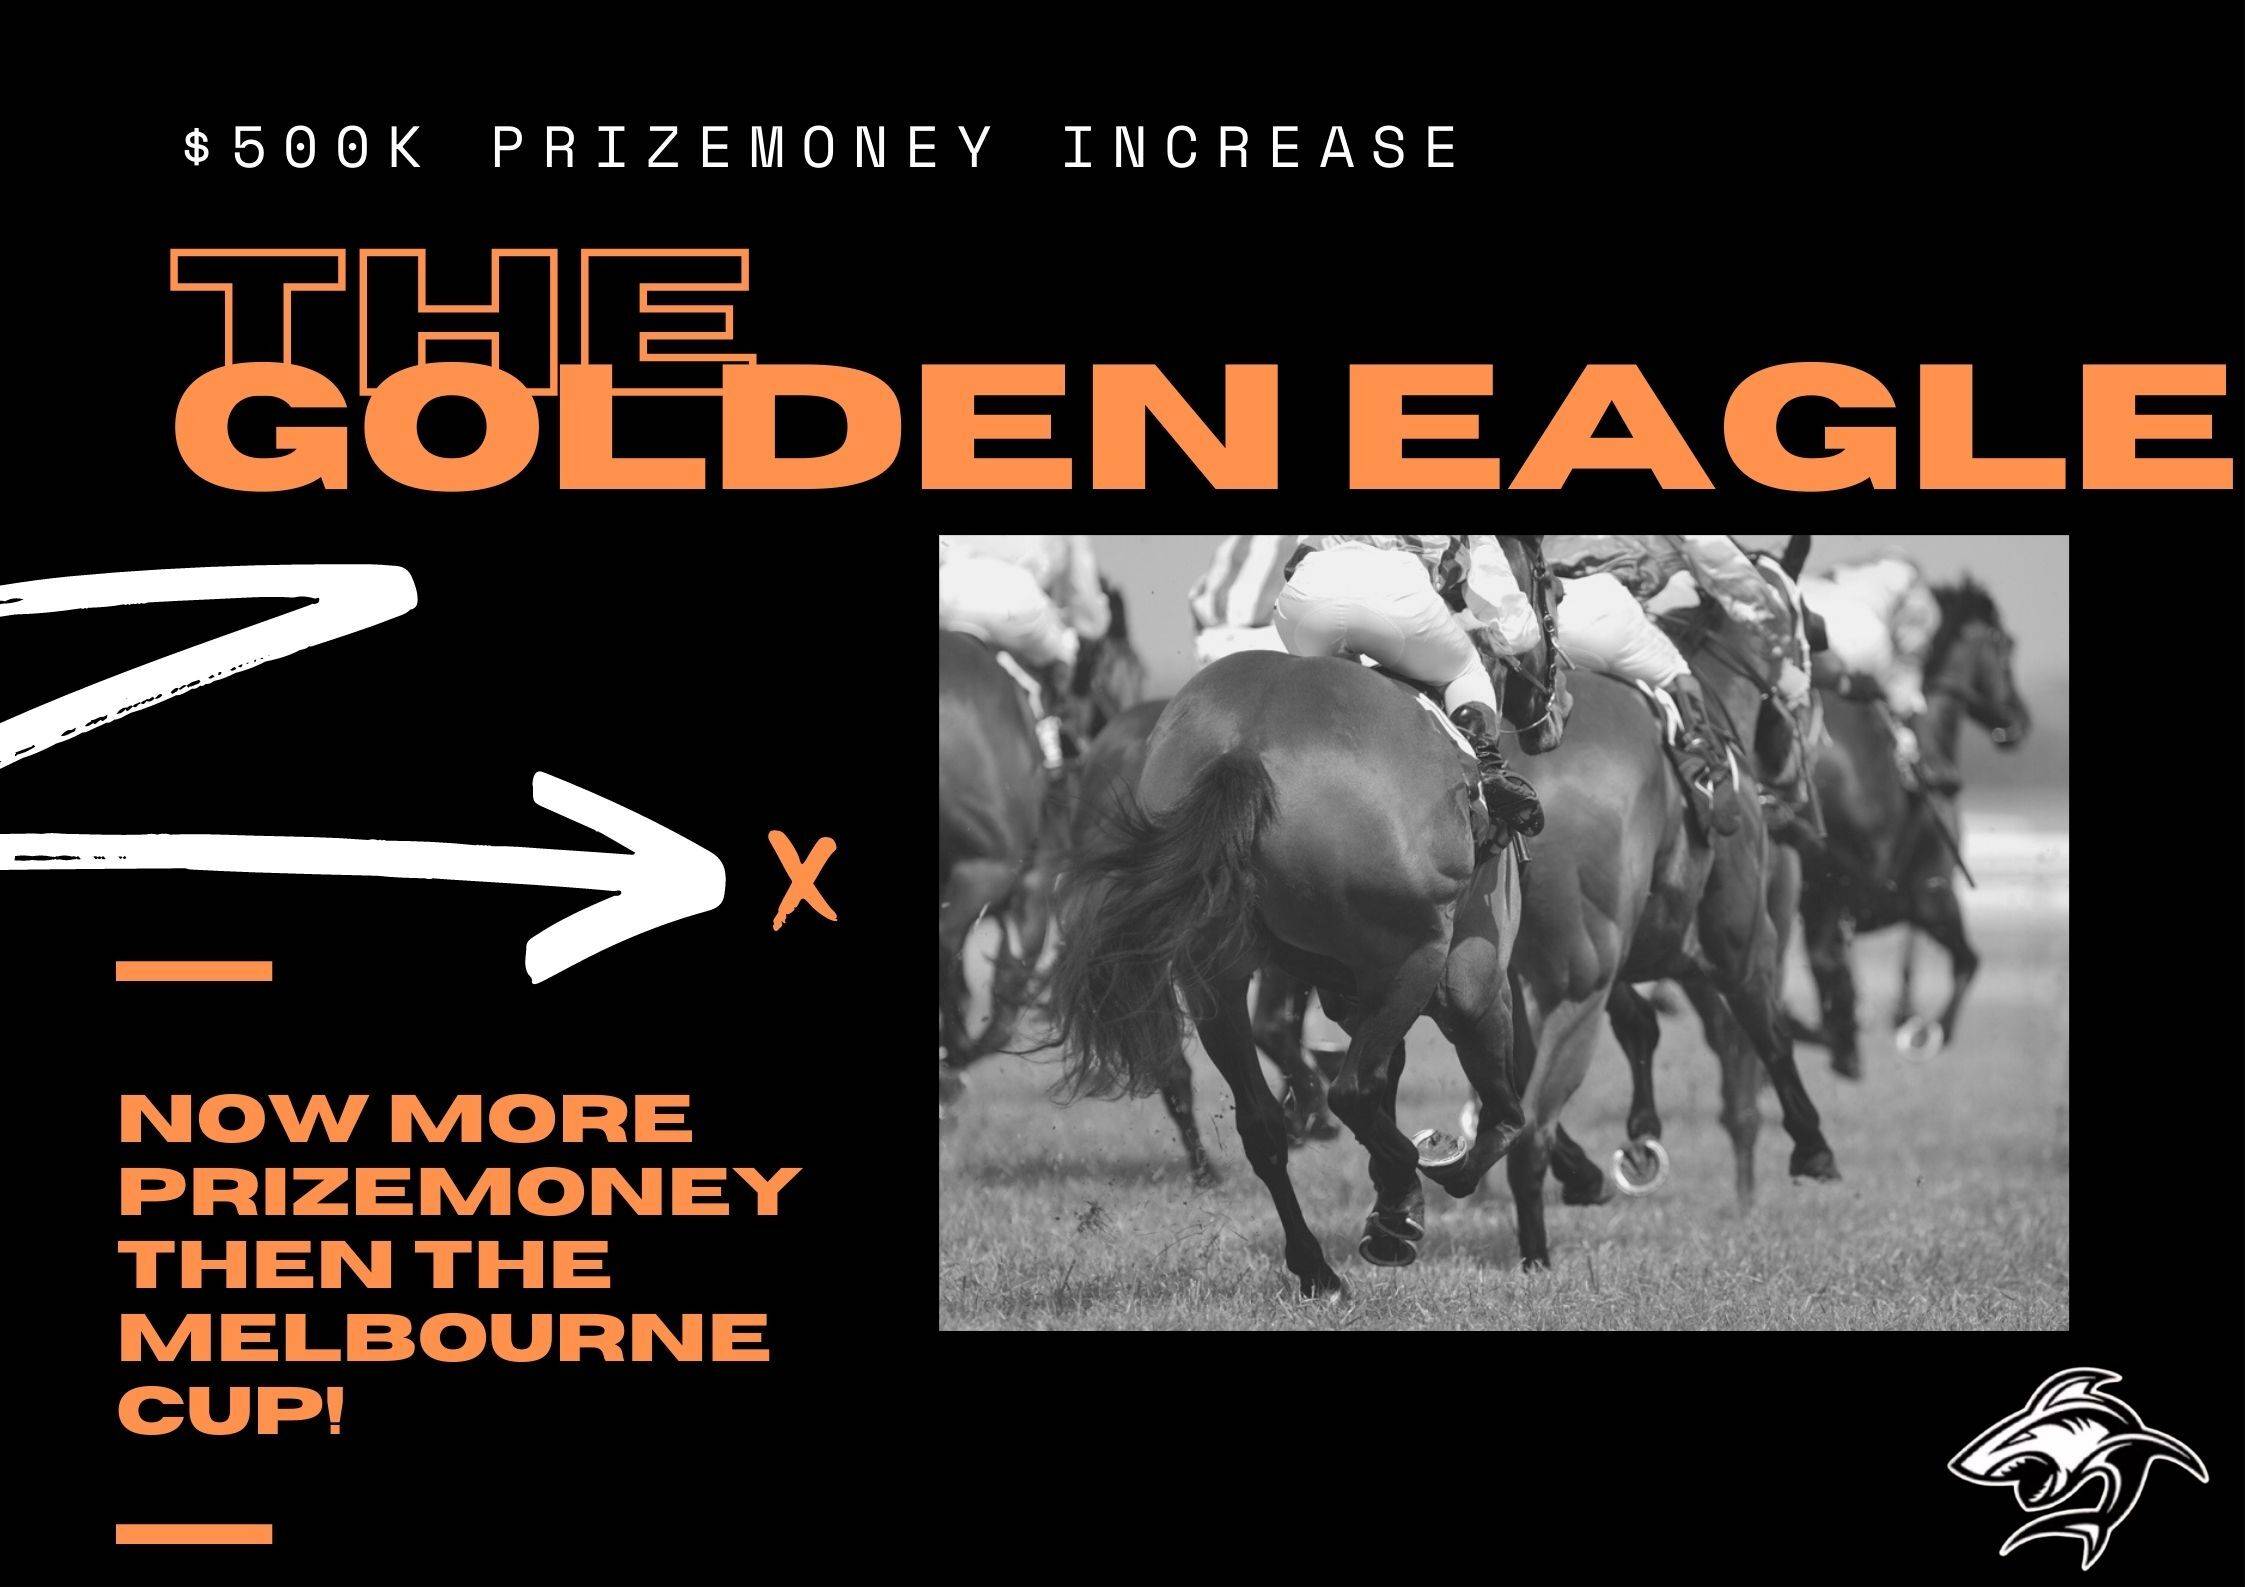 Golden Eagle Prizemoney Increase